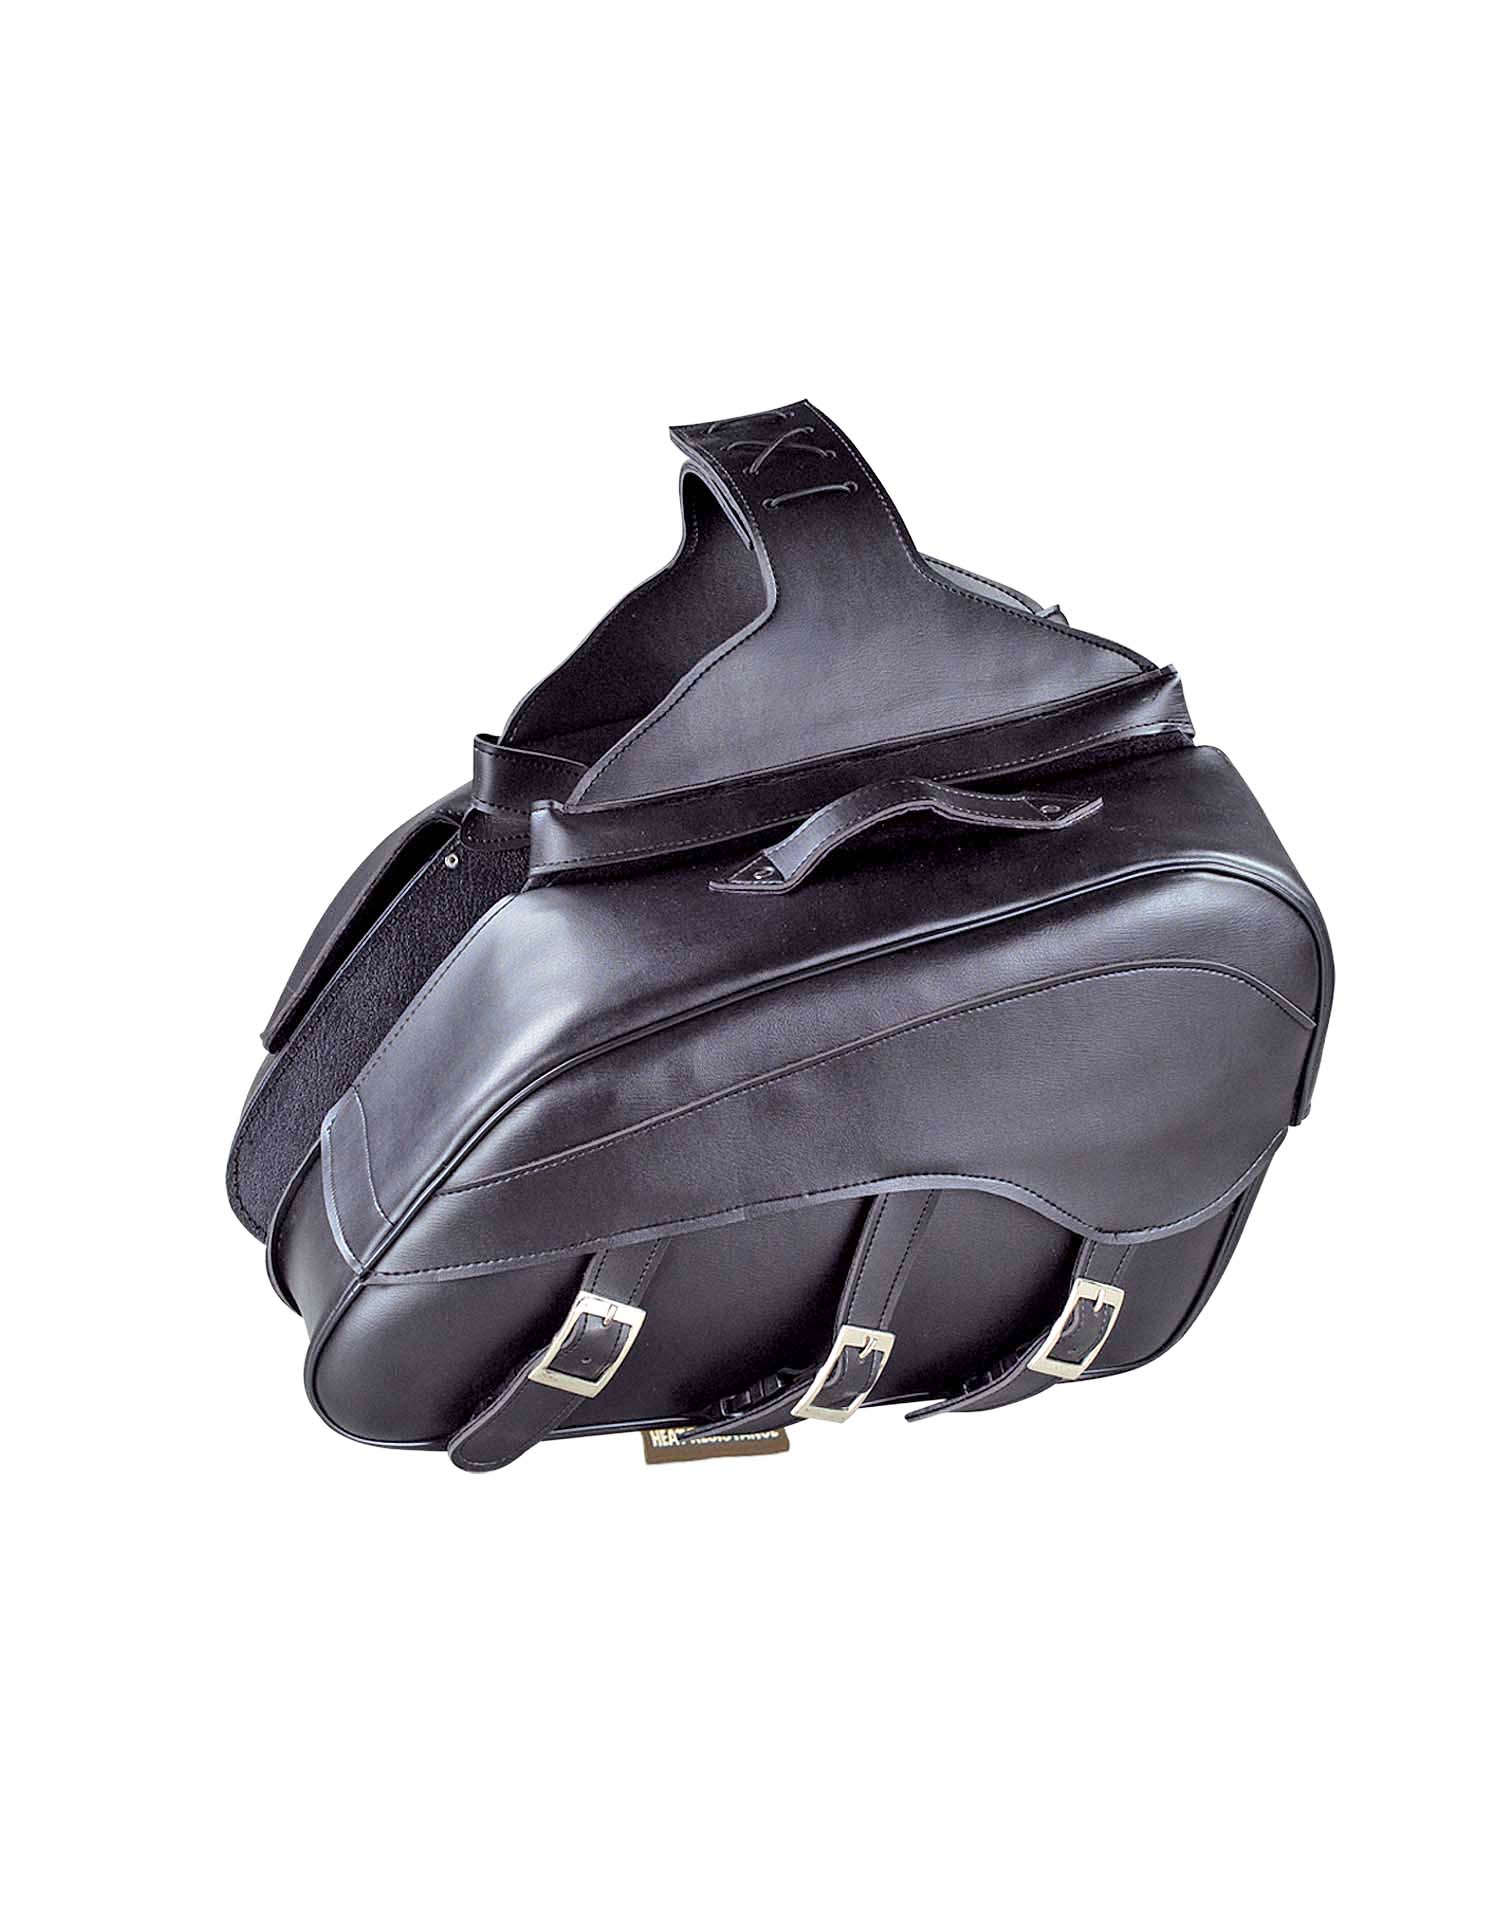 PVC Saddle Bags, 19” x 11” x 6”